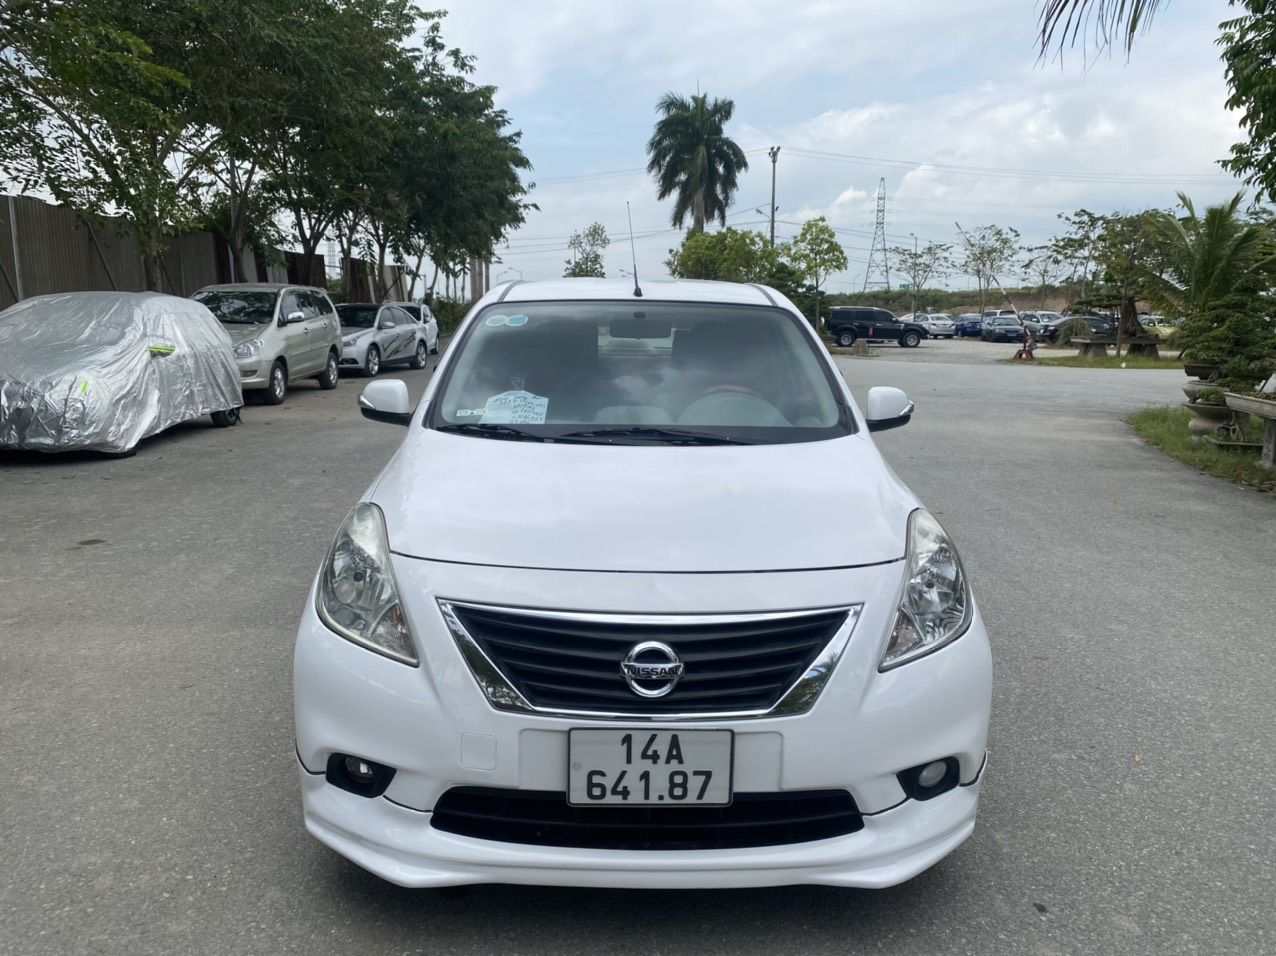 Nissan Sunny 2018 - Gốc Hà Nội (đỡ được 20 triệu vào biển)